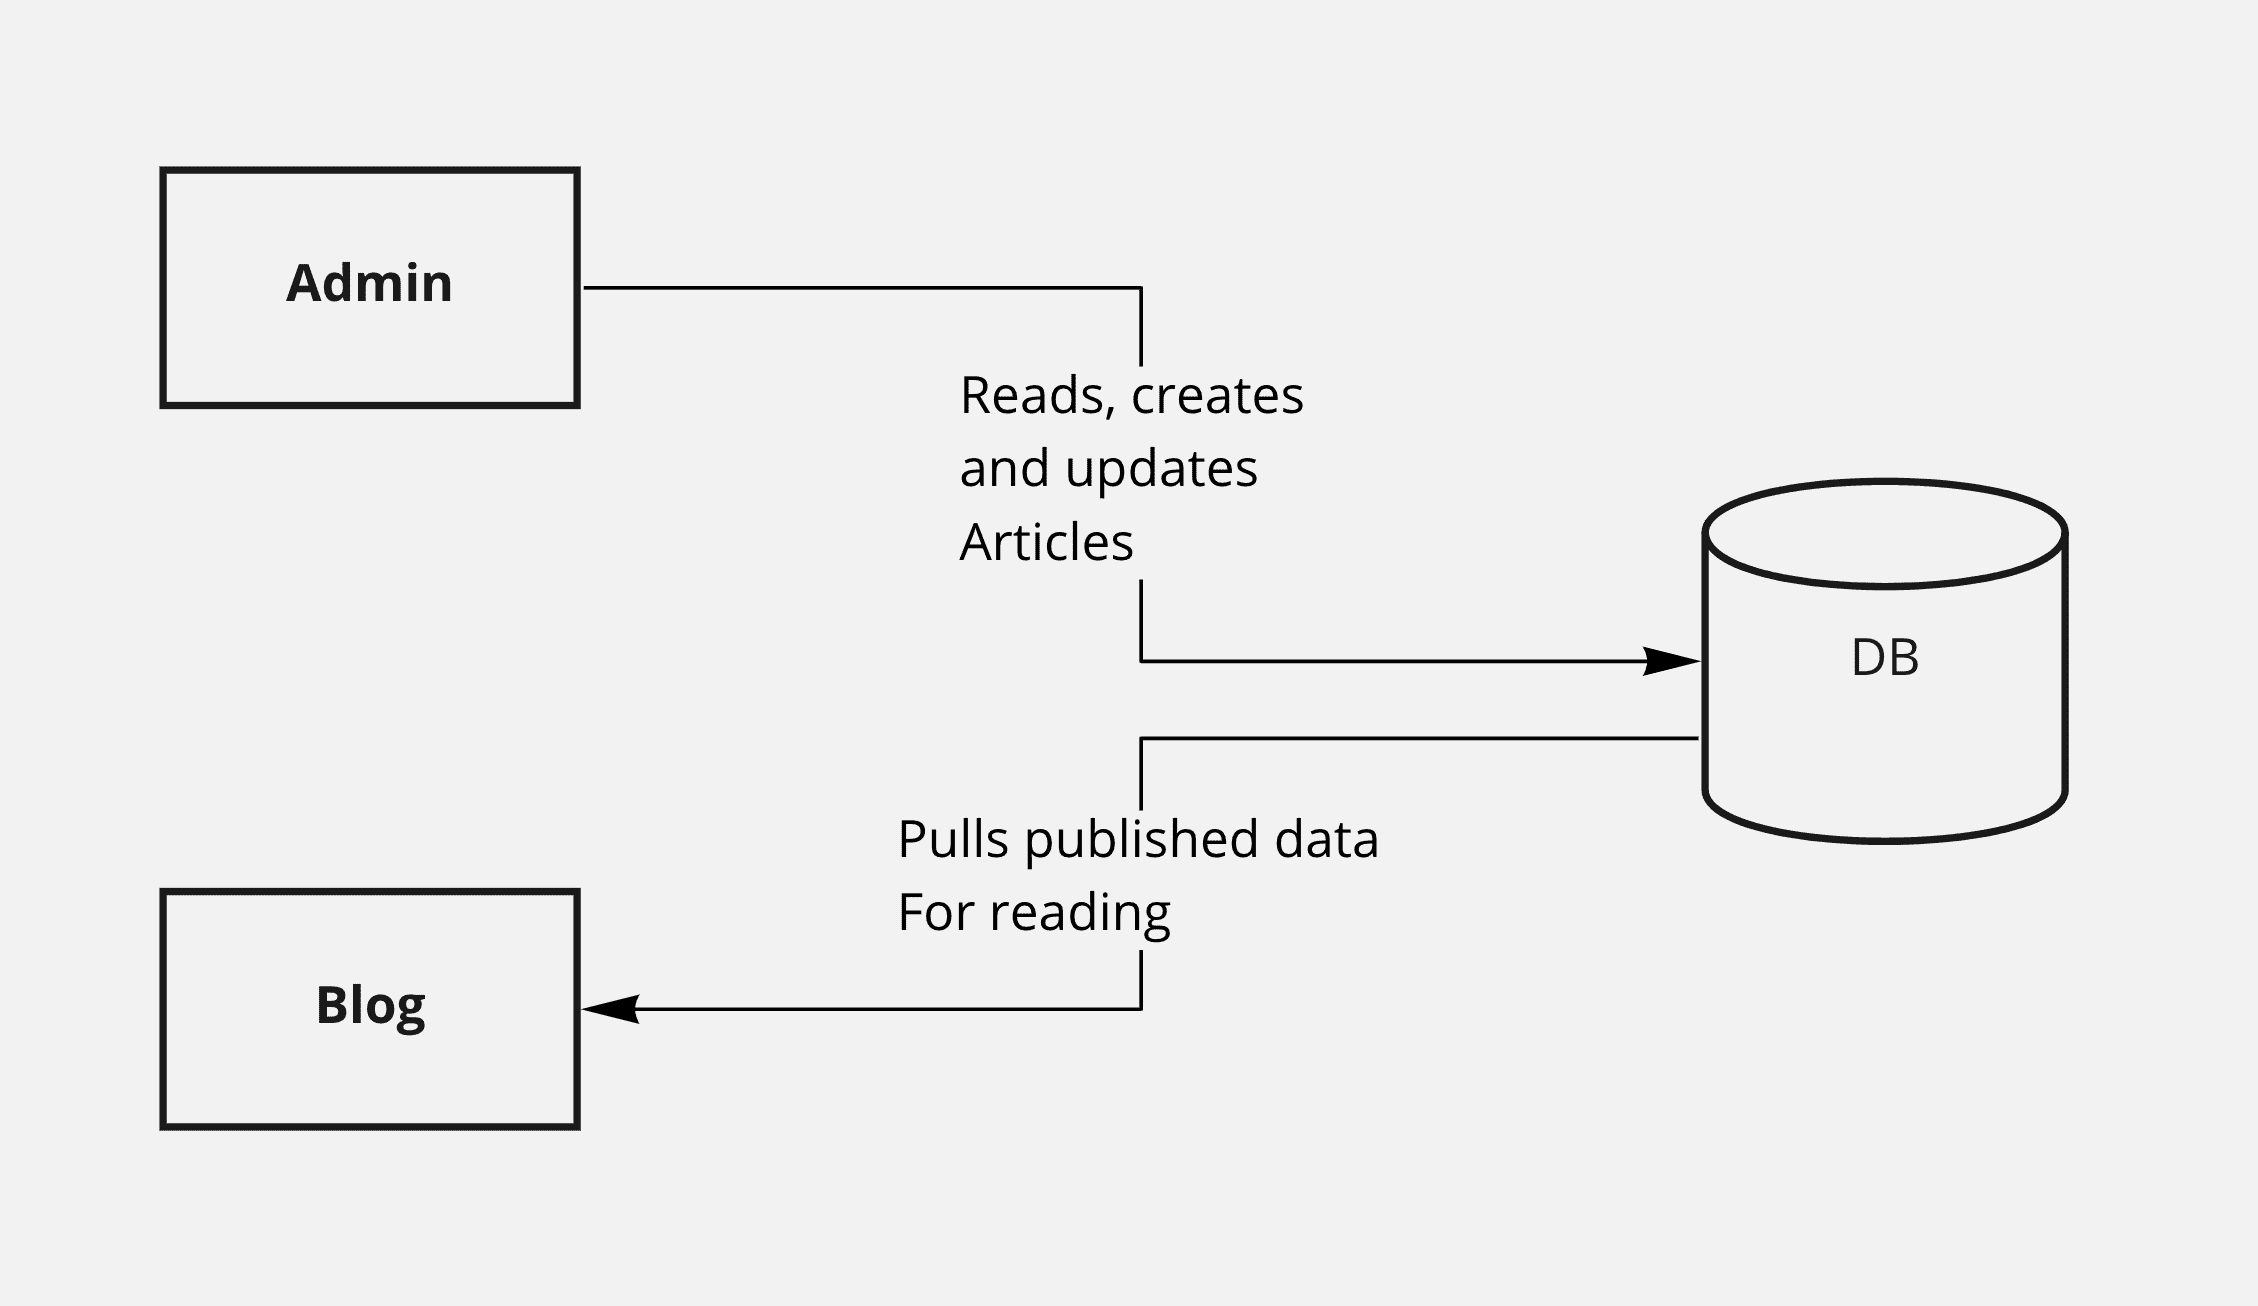 Multi-Slice DB connection